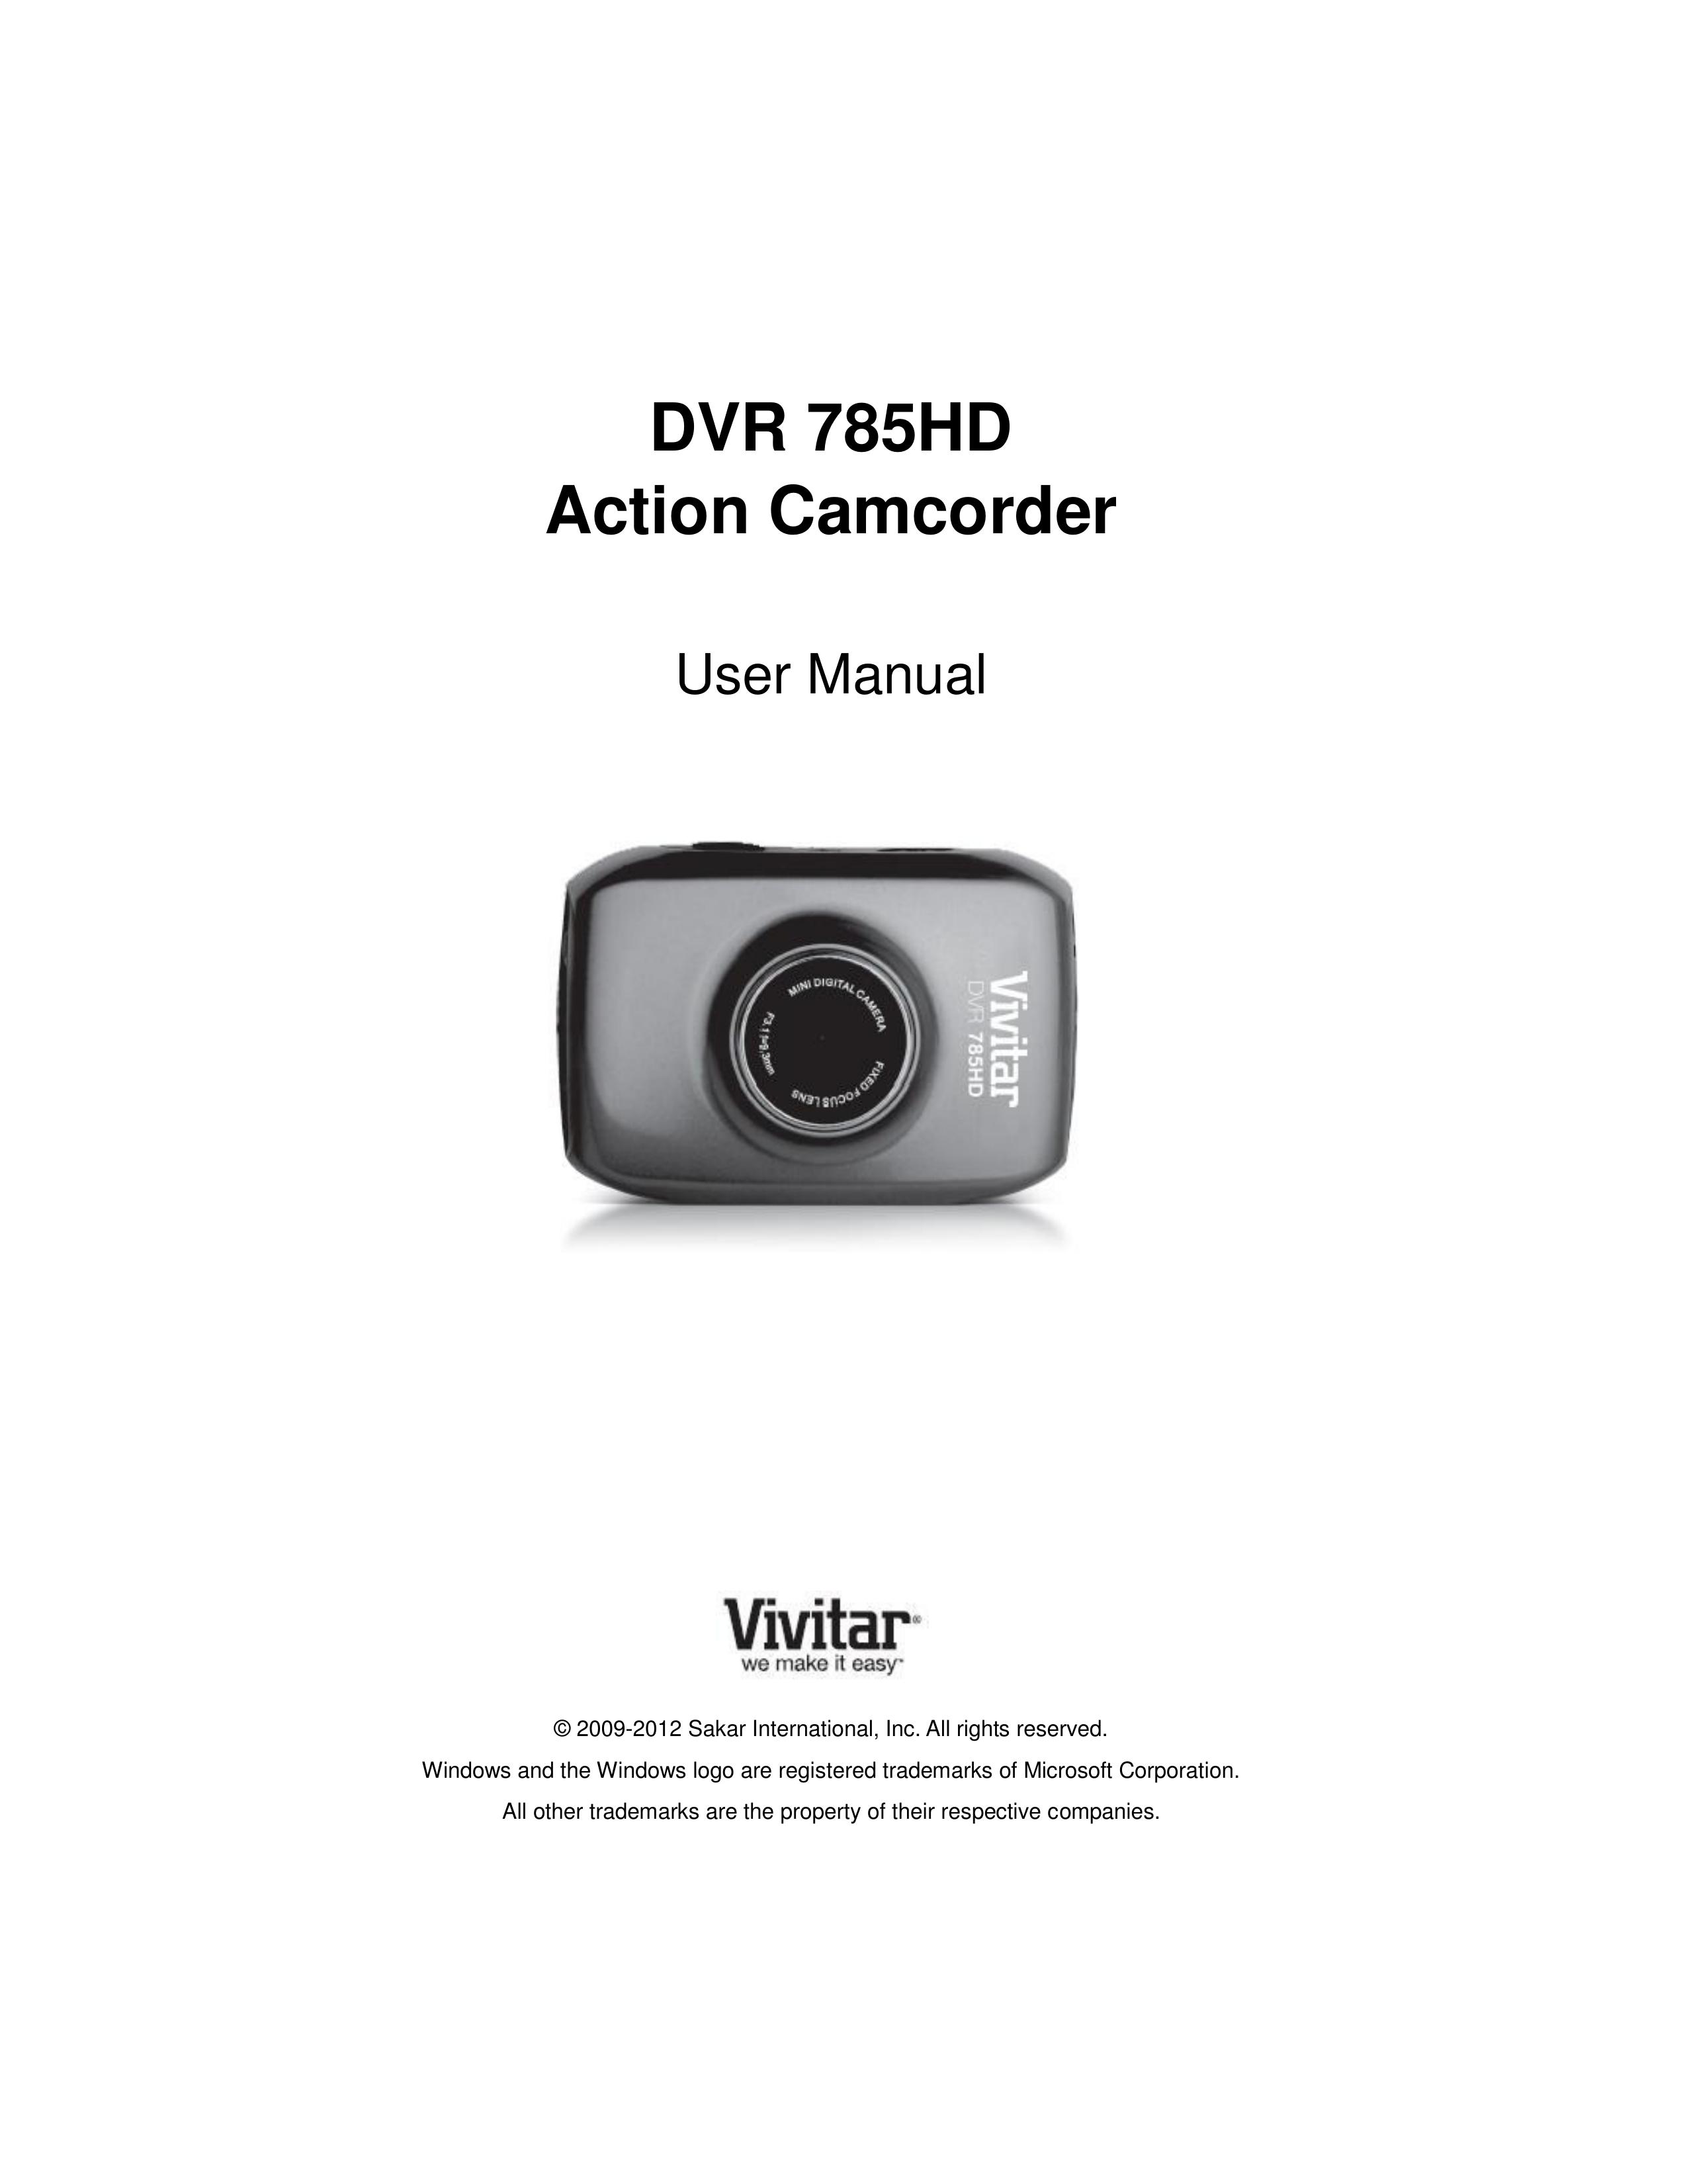 Vivitar DVR 785HD Camcorder User Manual